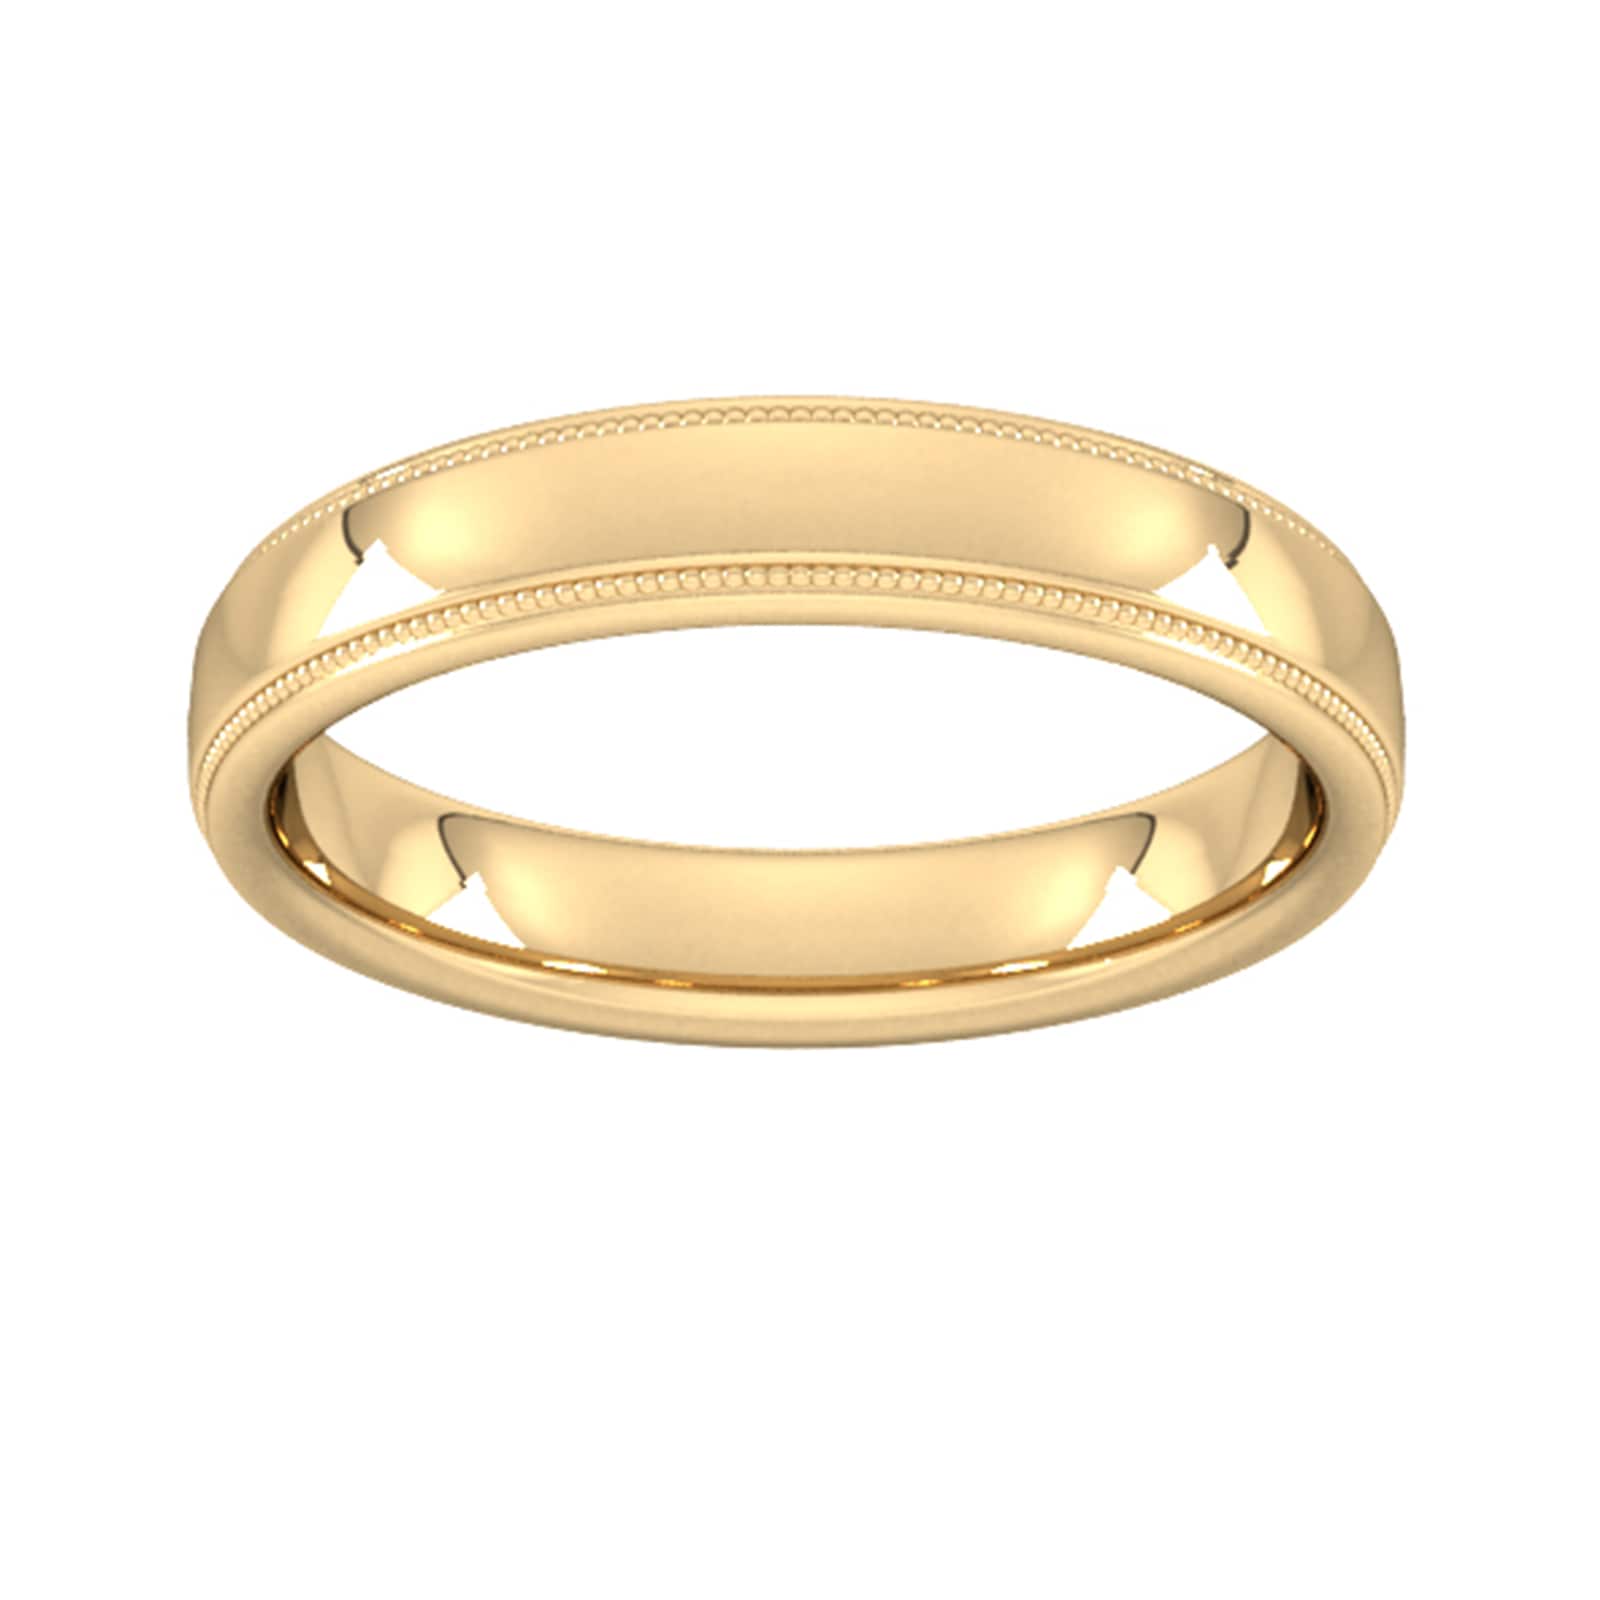 3mm D Shape Heavy Milgrain Edge Wedding Ring In 18 Carat Yellow Gold - Ring Size O